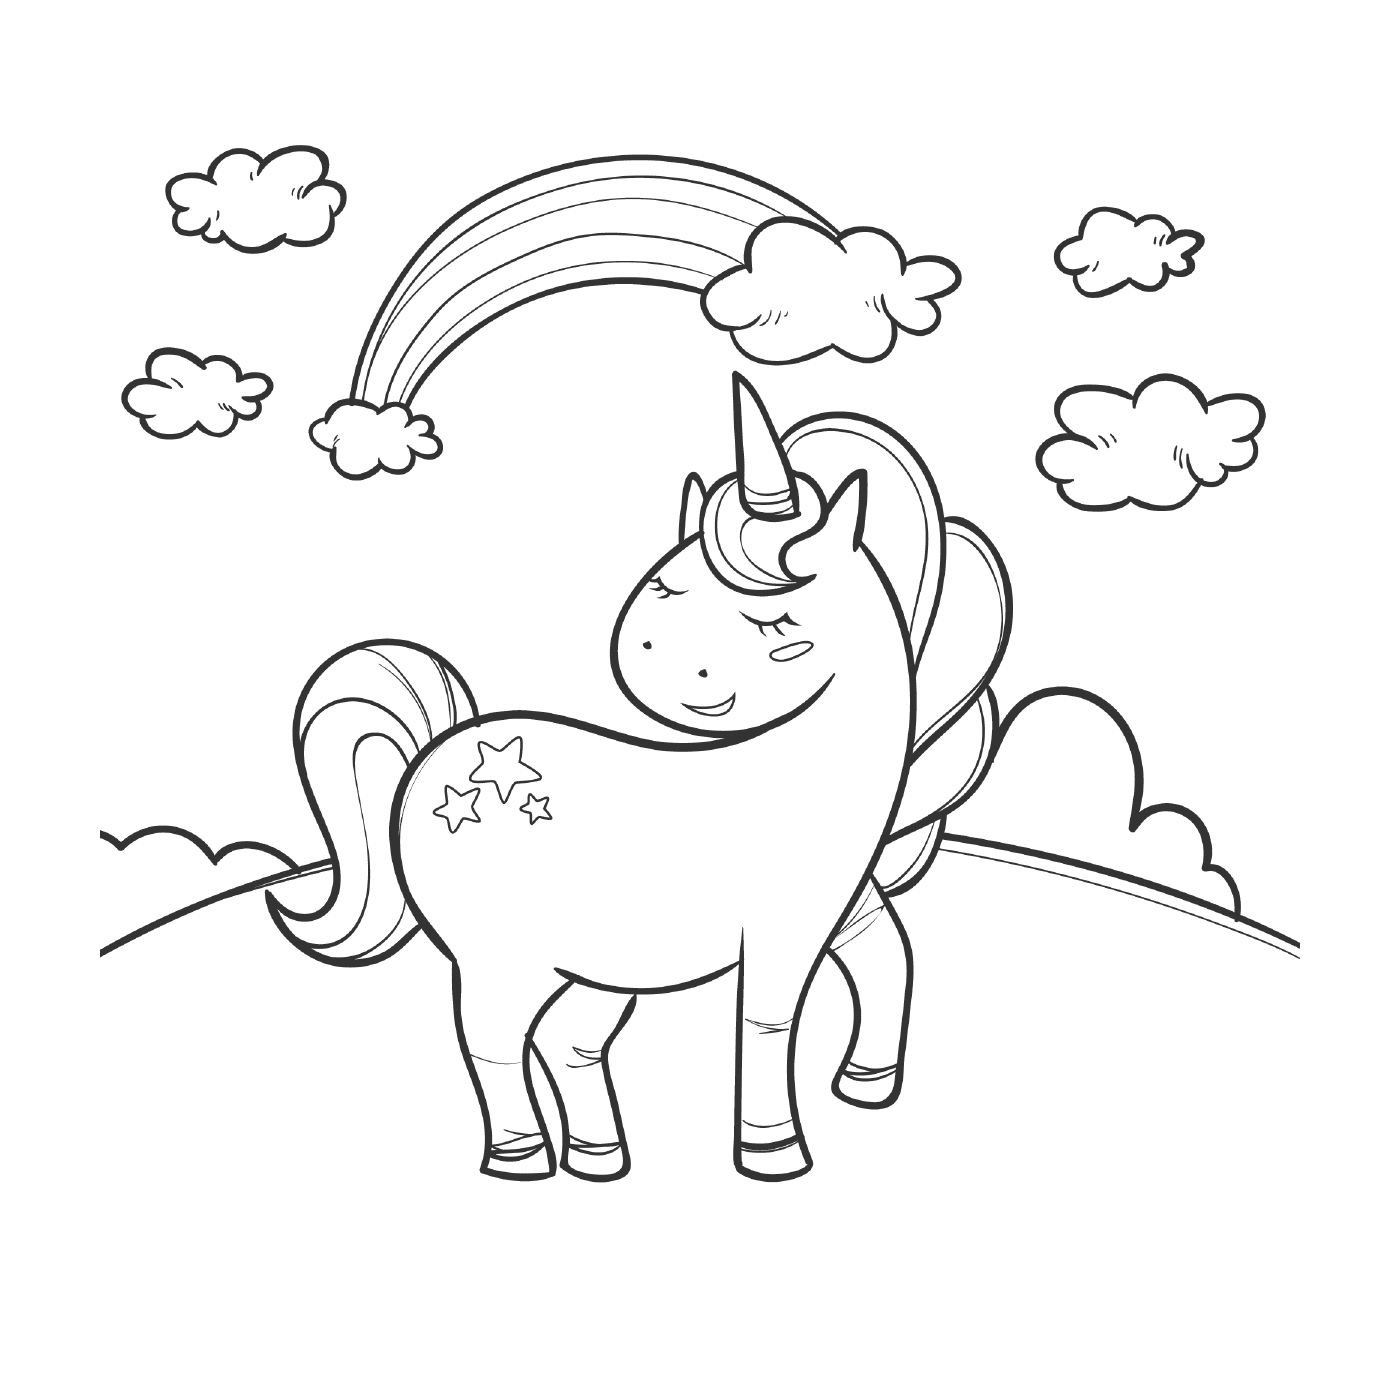  A unicorn 